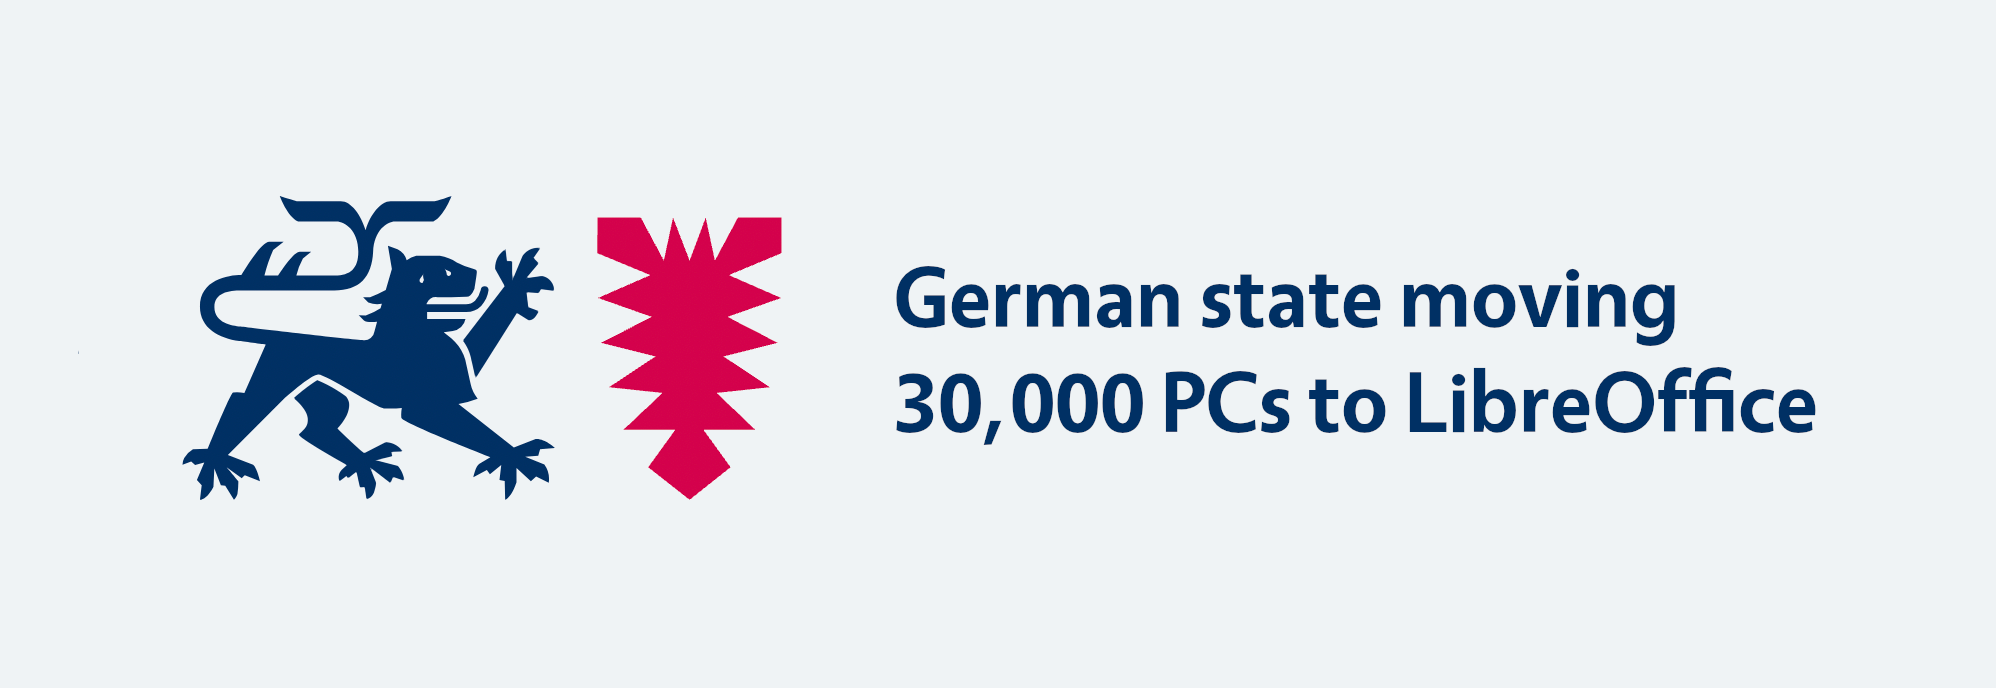 German state moving 30,000 PCs to LibreOffice